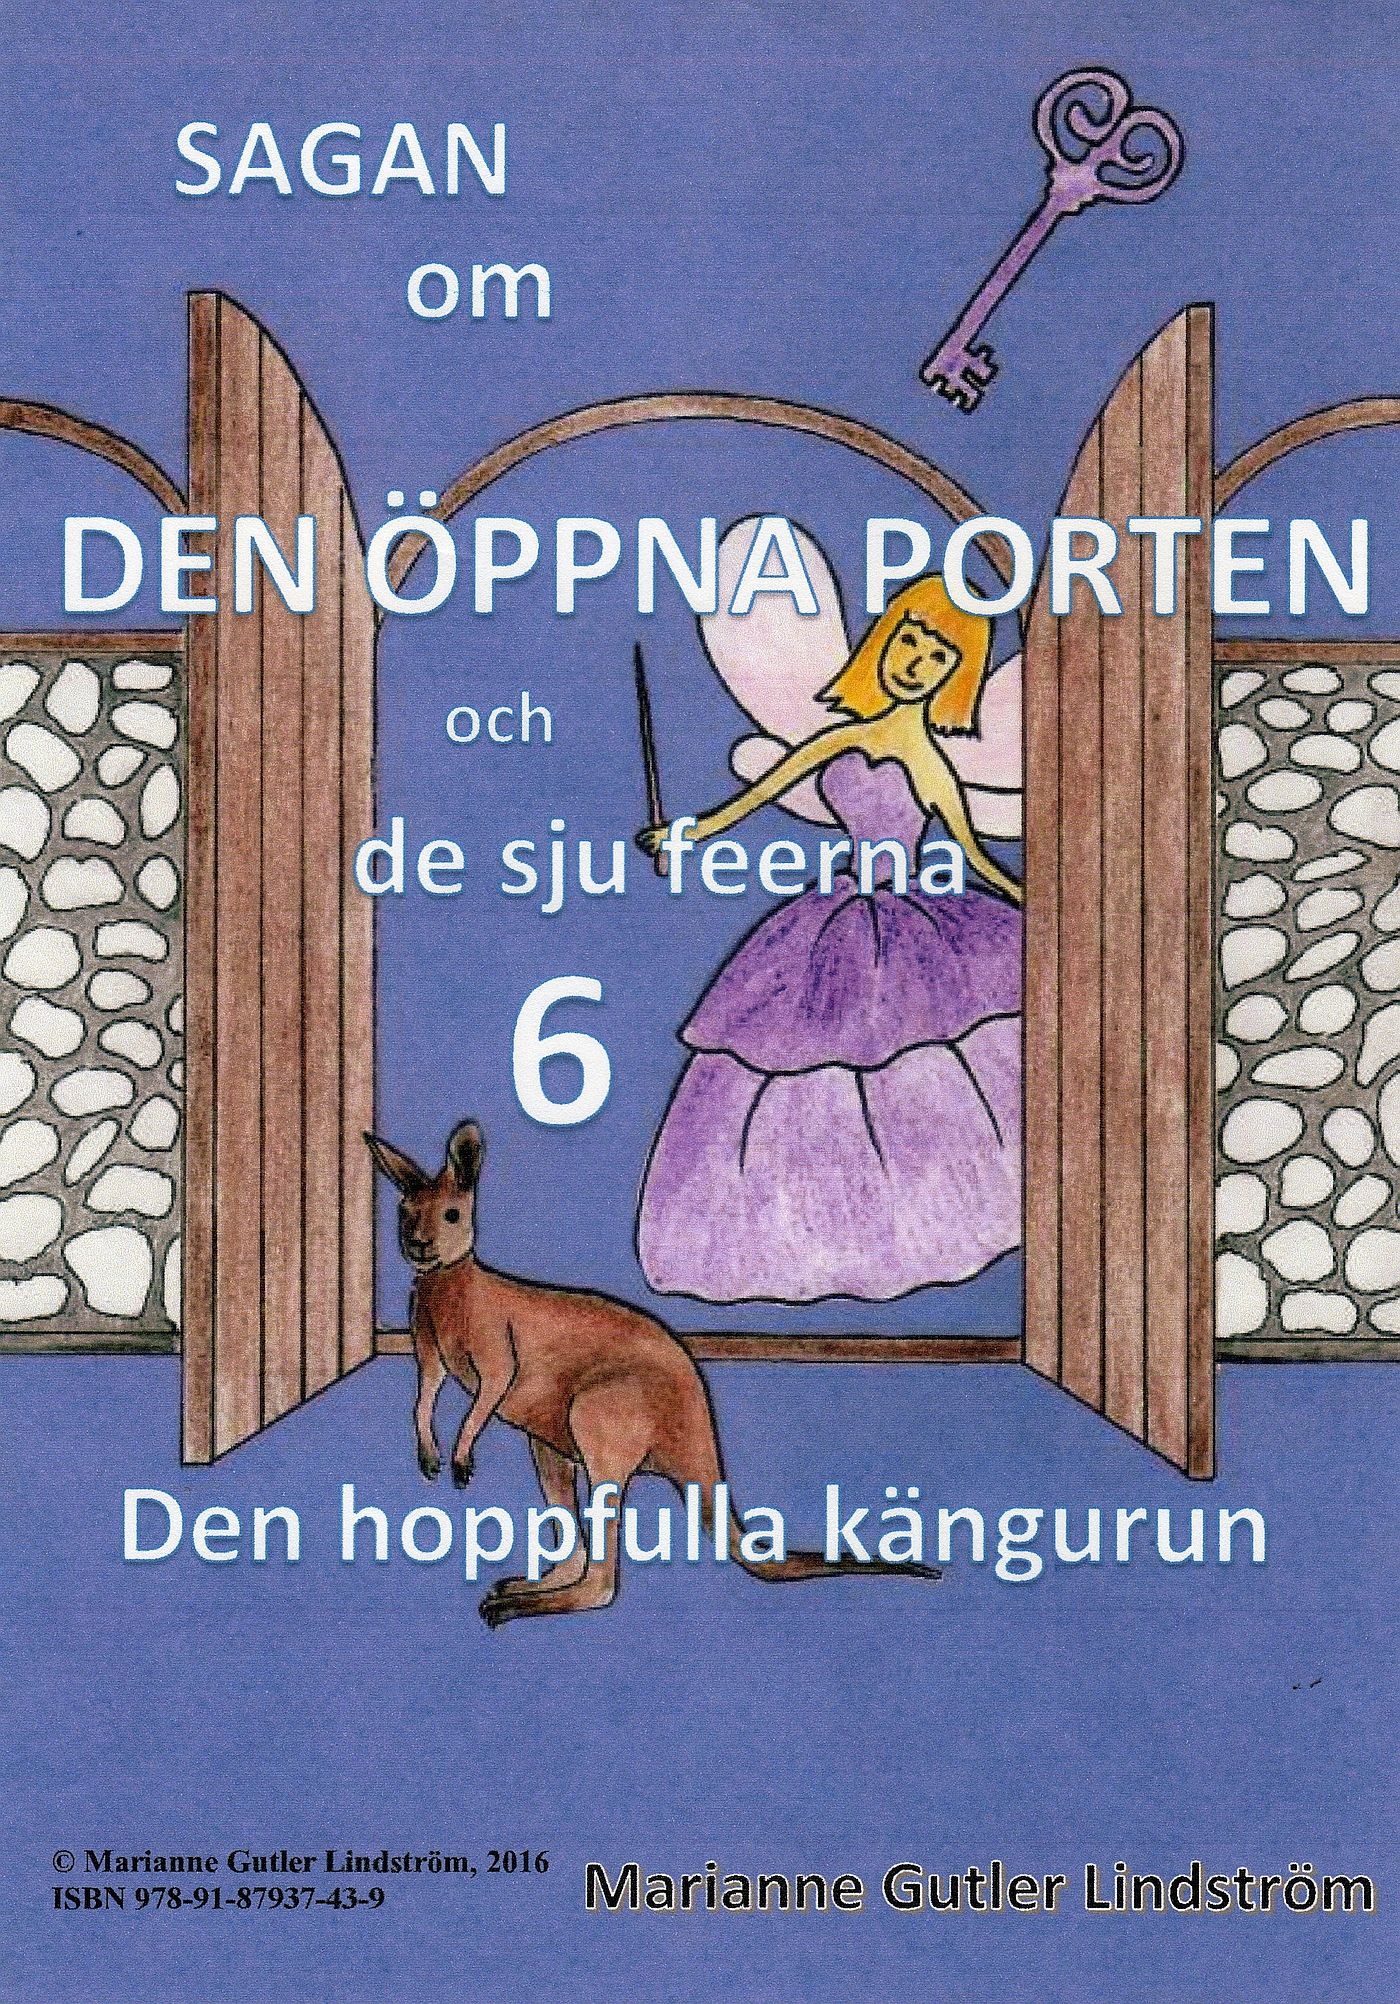 Sagan om den öppna porten 6. Den hoppfulla kängurun, e-bok av Marianne Gutler Lindström